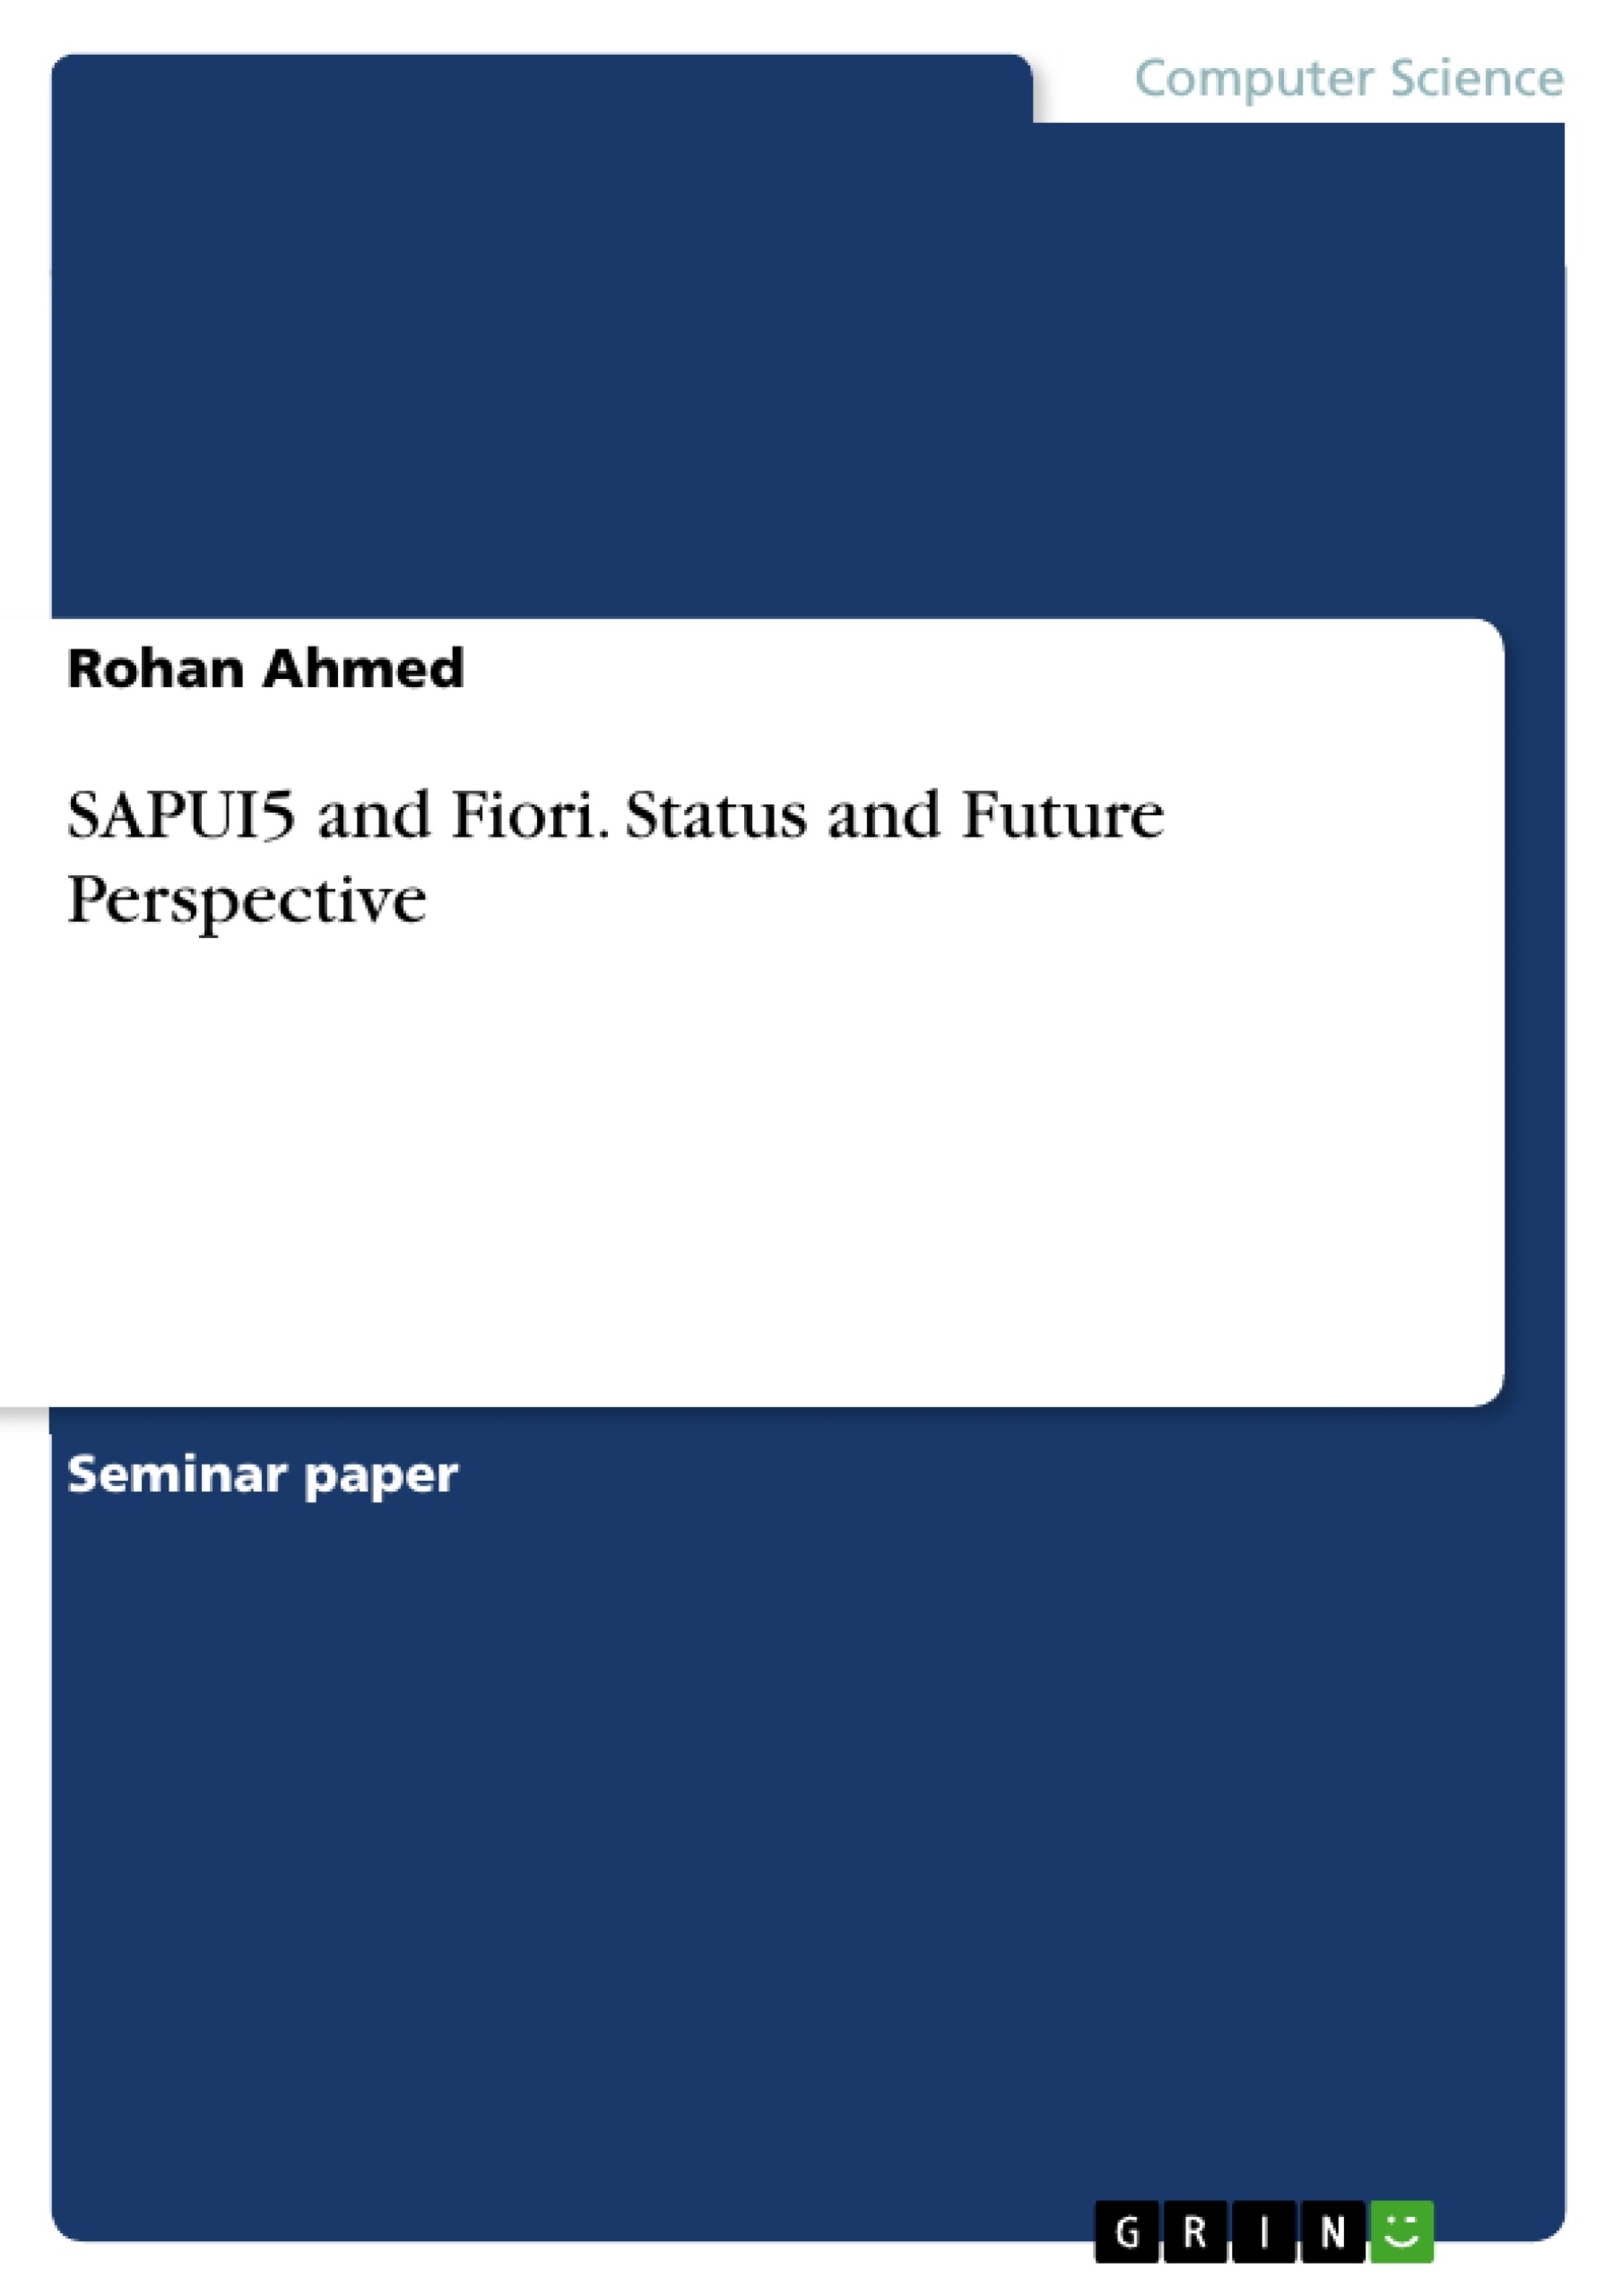 Title: SAPUI5 and Fiori. Status and Future Perspective